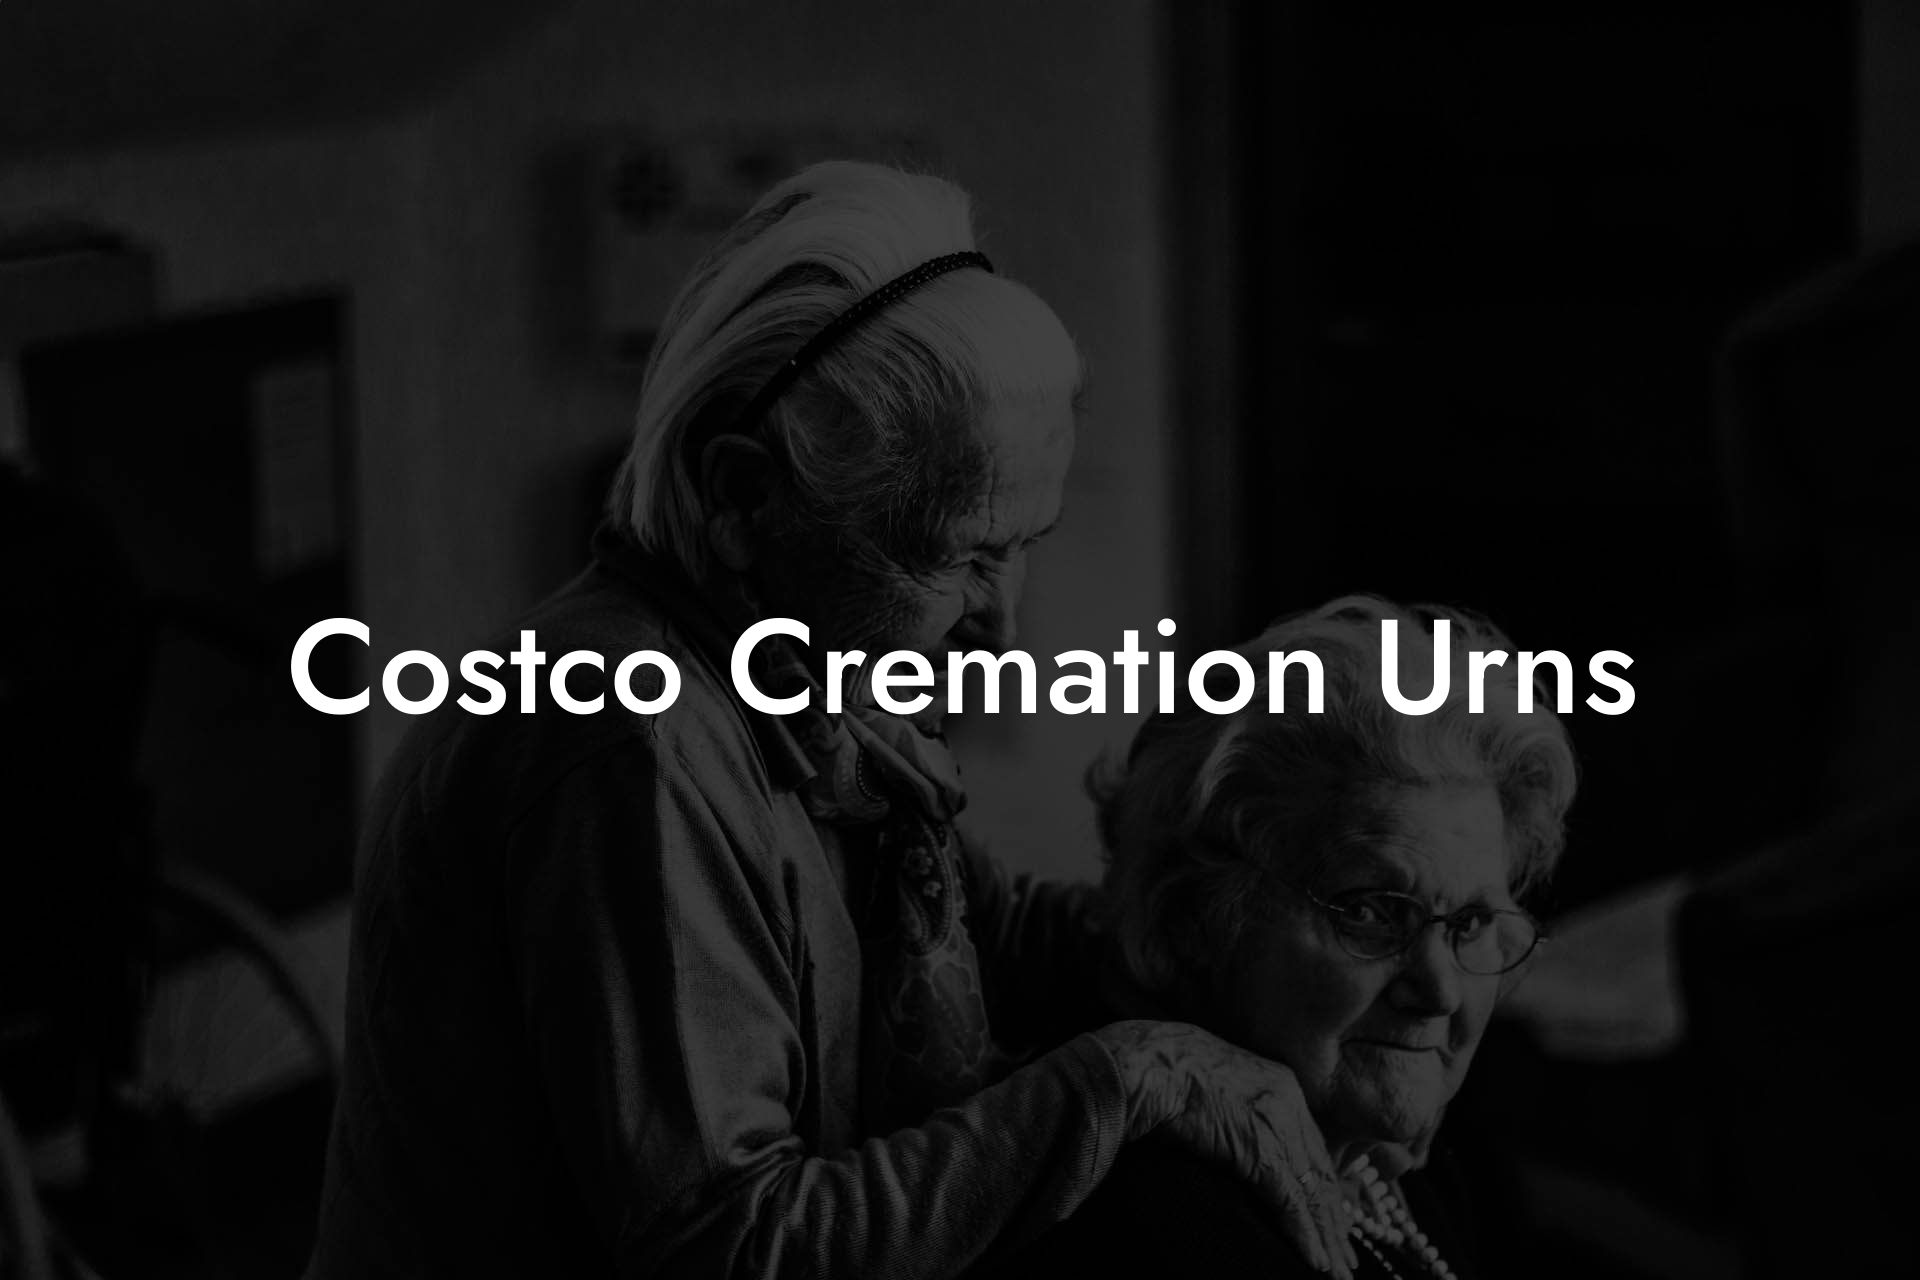 Costco Cremation Urns